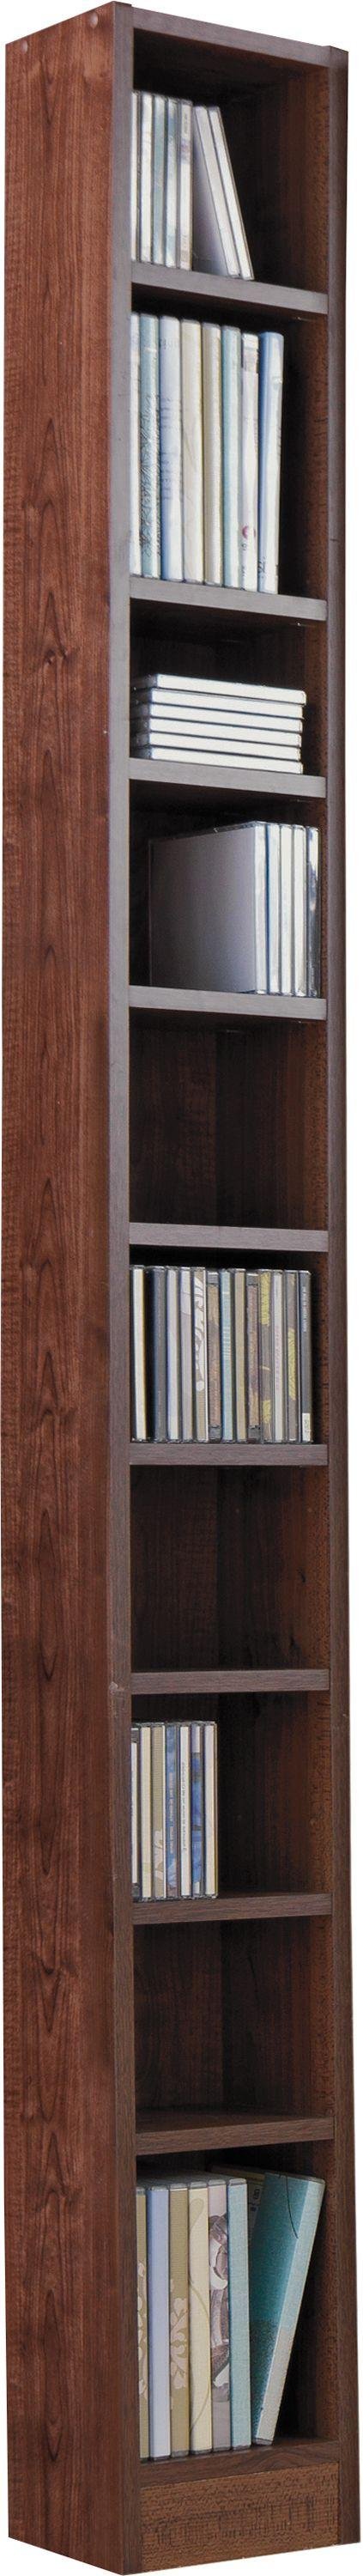 Argos Home Maine Tall CD and DVD Media Storage - Walnut Eff